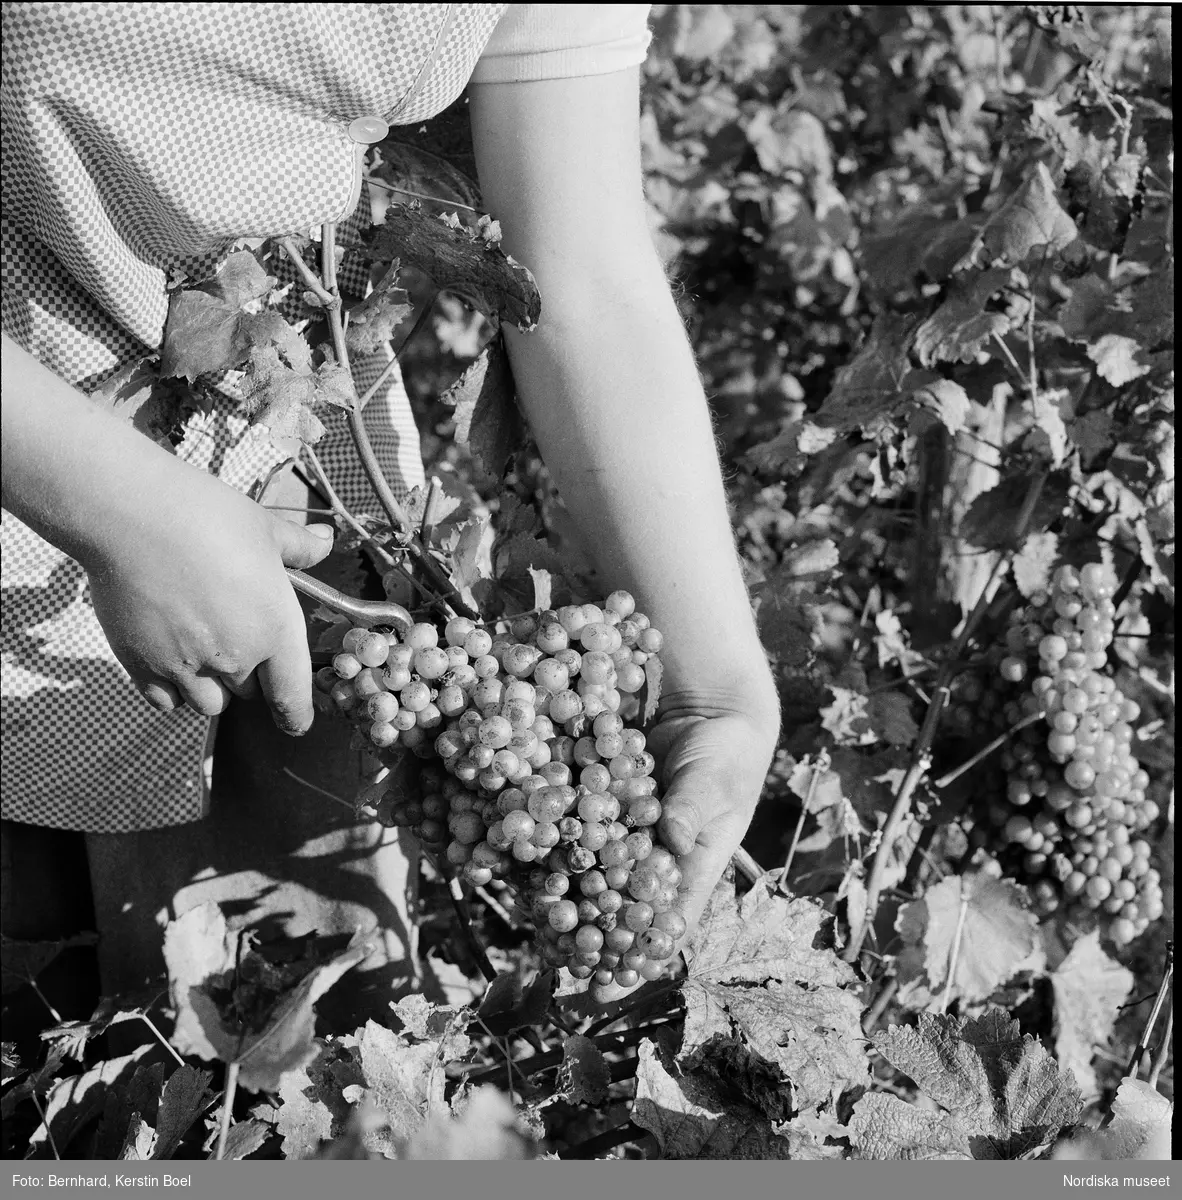 Frankrike, Loire-dalen, Muscadet-druvor. 
En kvinna skördar druvor.